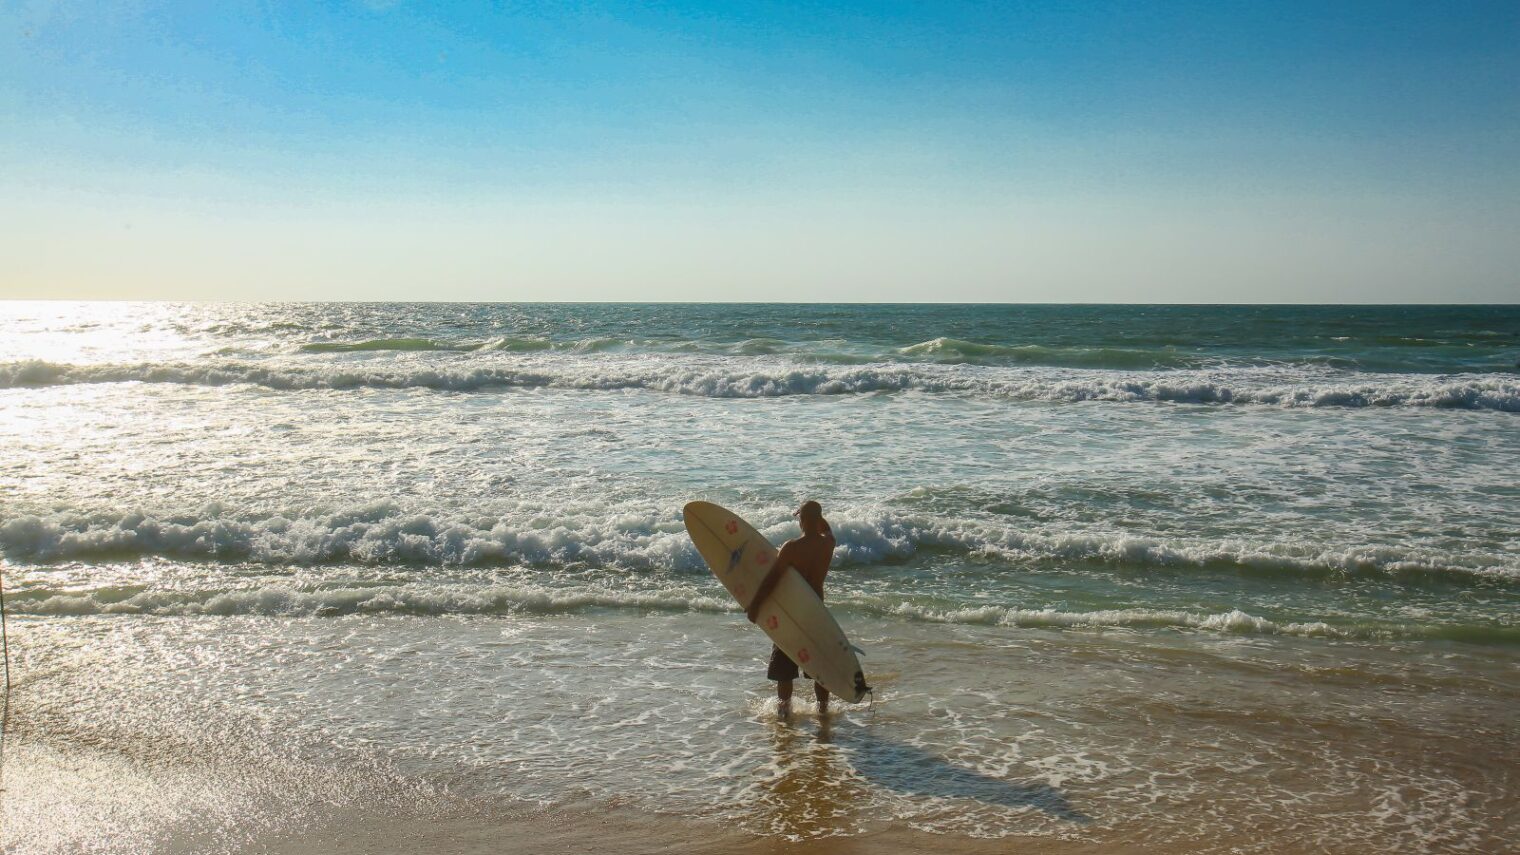 A surfer on the shore of Zikim Beach. Photo by Edi Israel/FLASH90